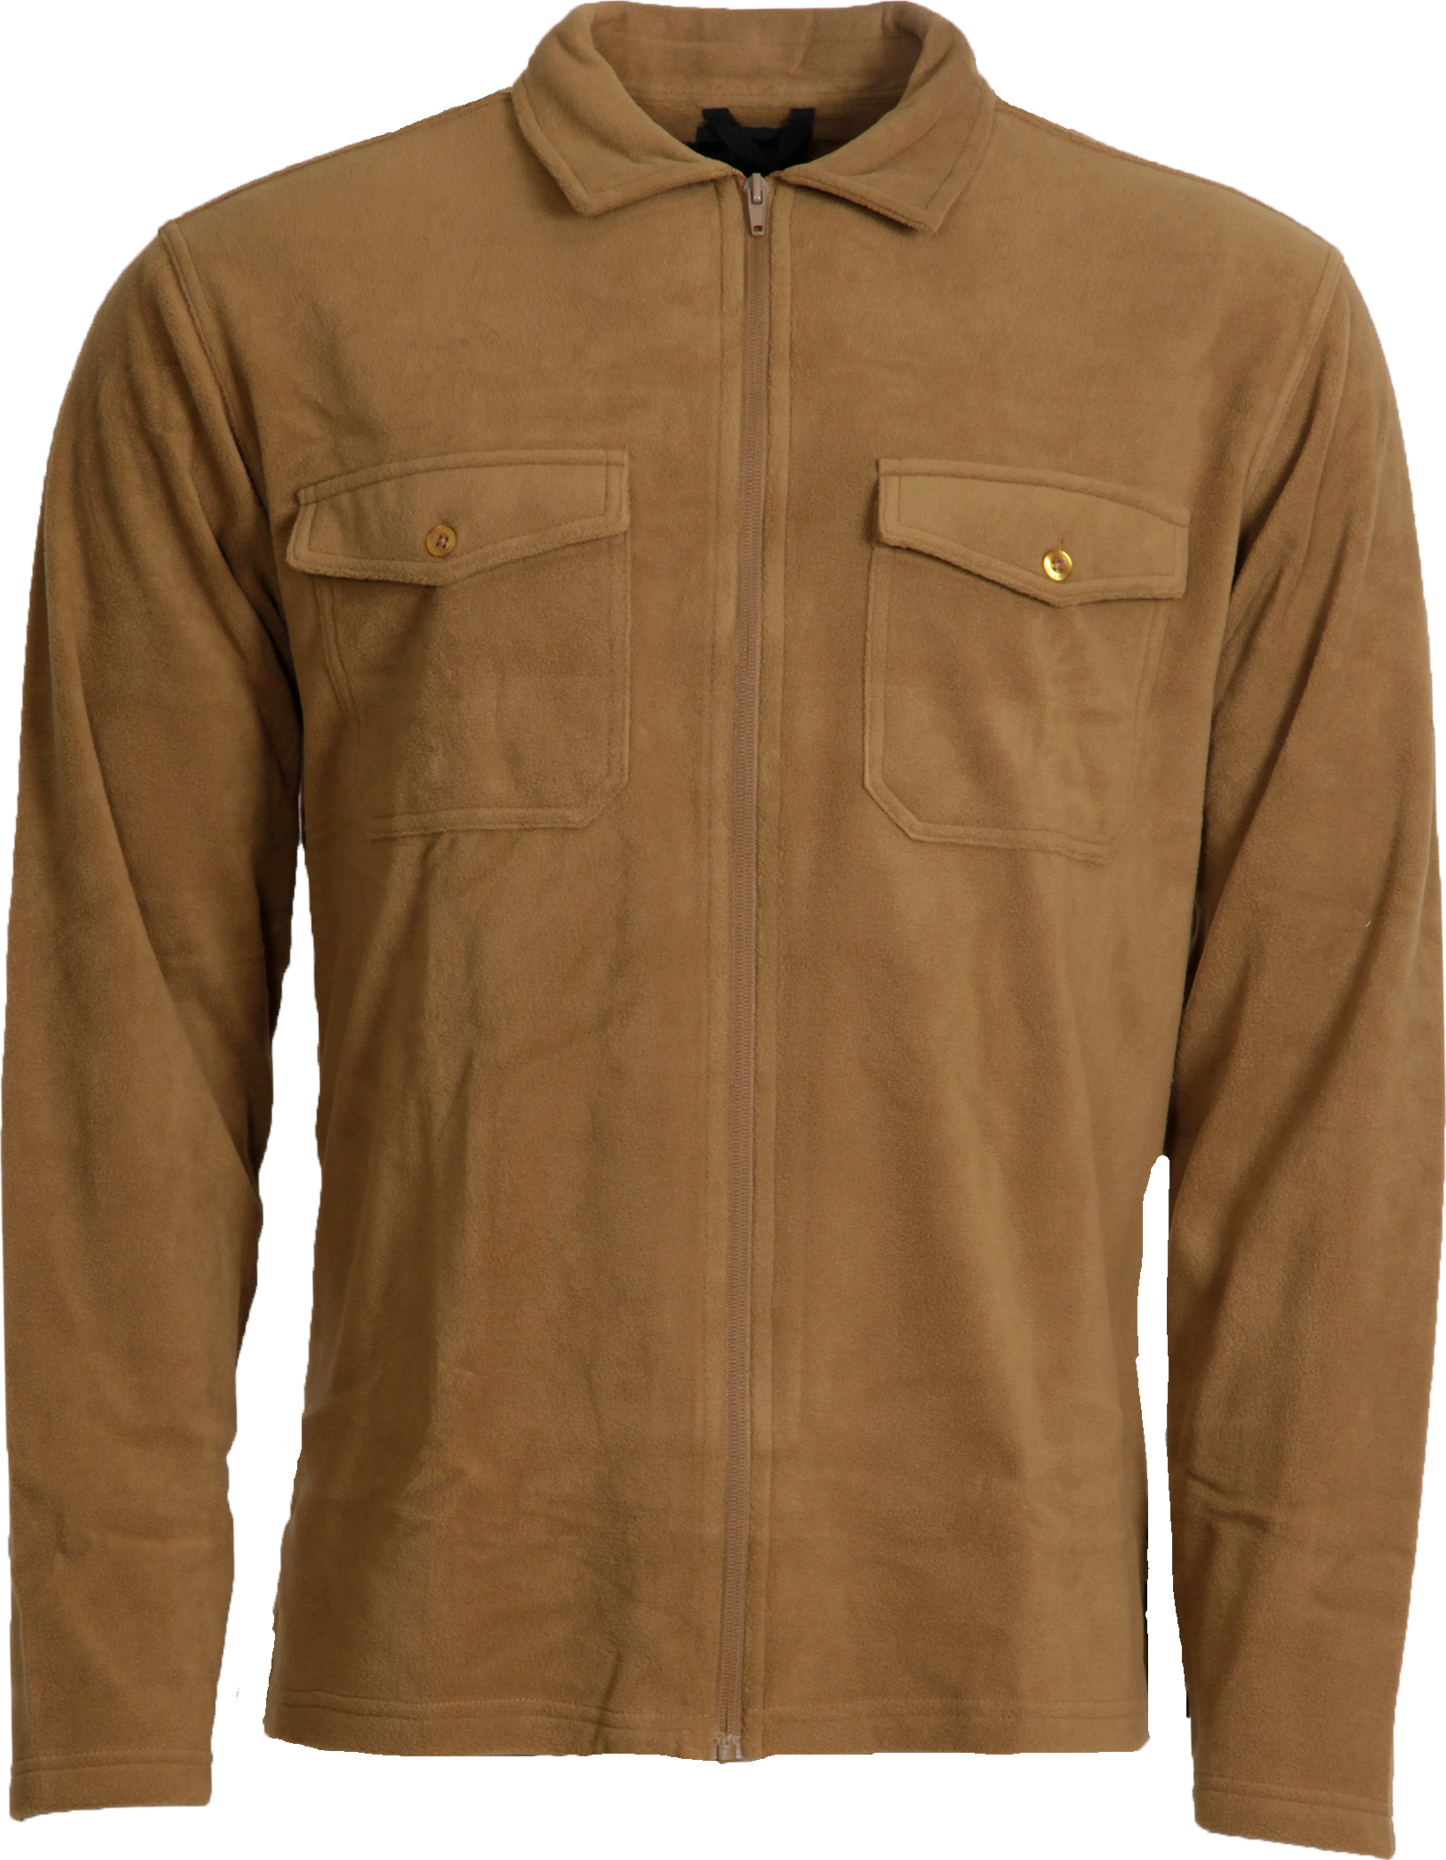 Dobsom Men's Pescara Fleece Shirt Brown L, Brown